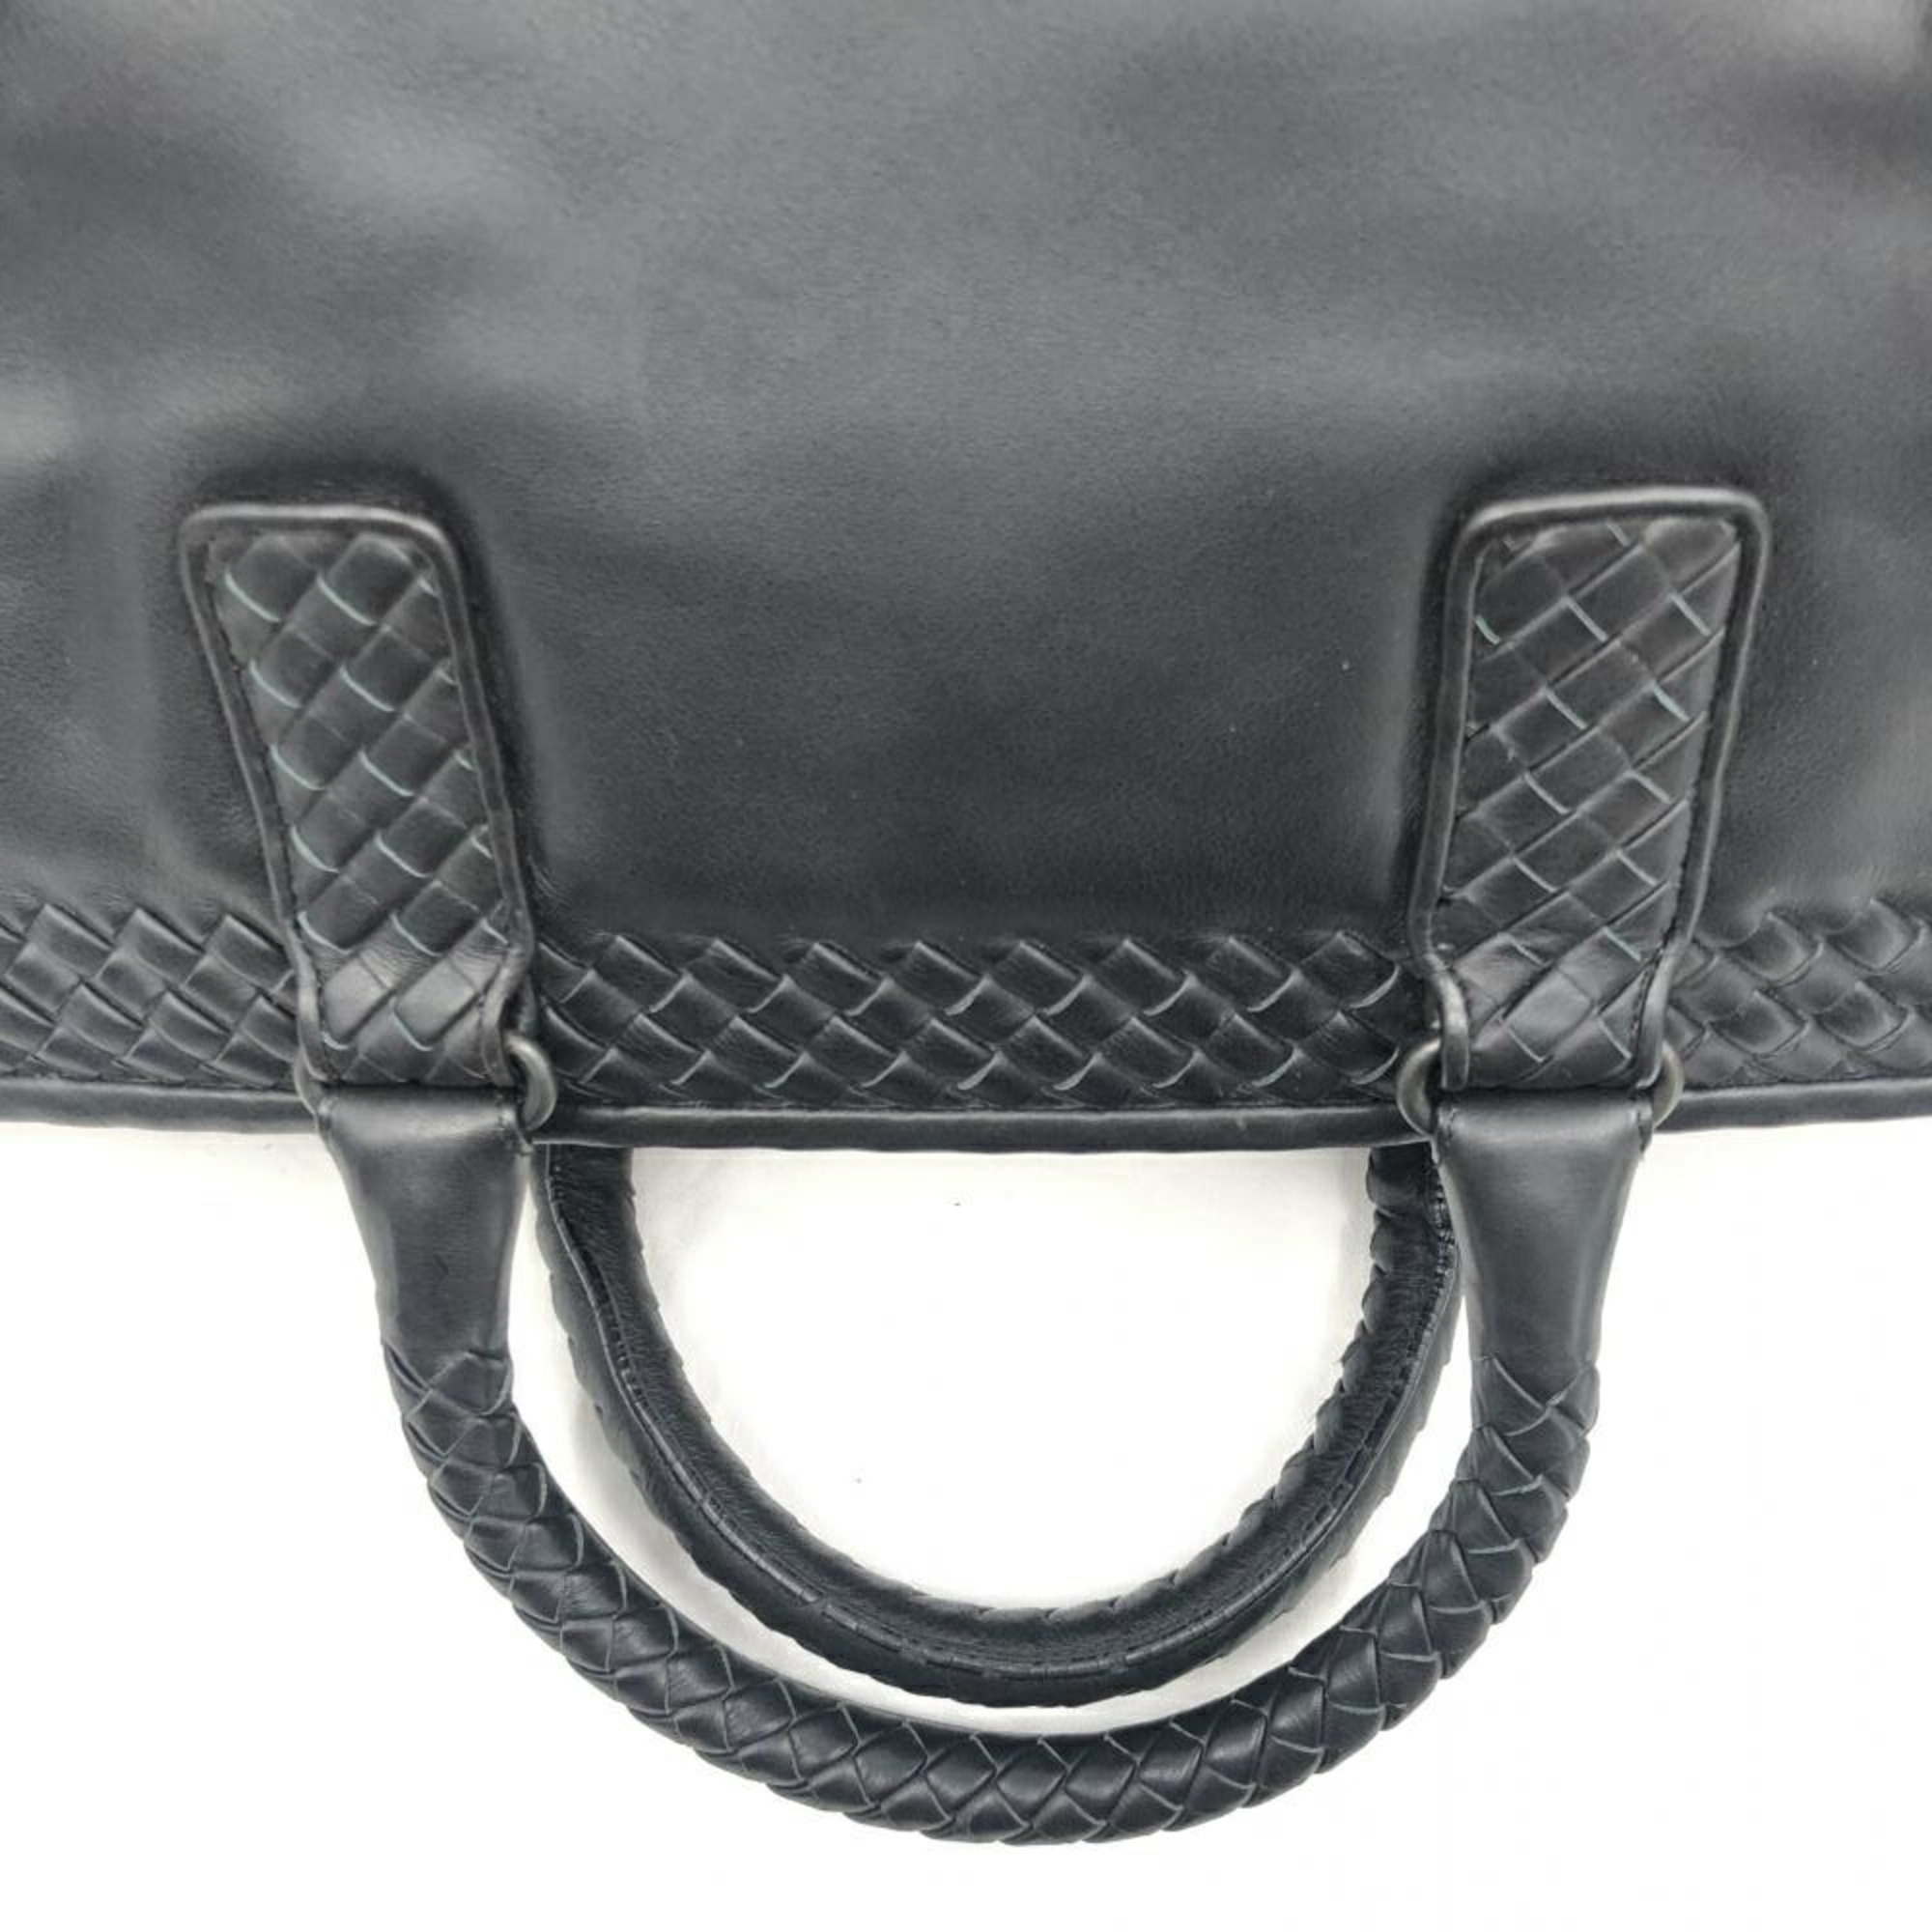 BOTTEGA VENETA Intrecciato Leather Bag 42465497 Bottega Veneta